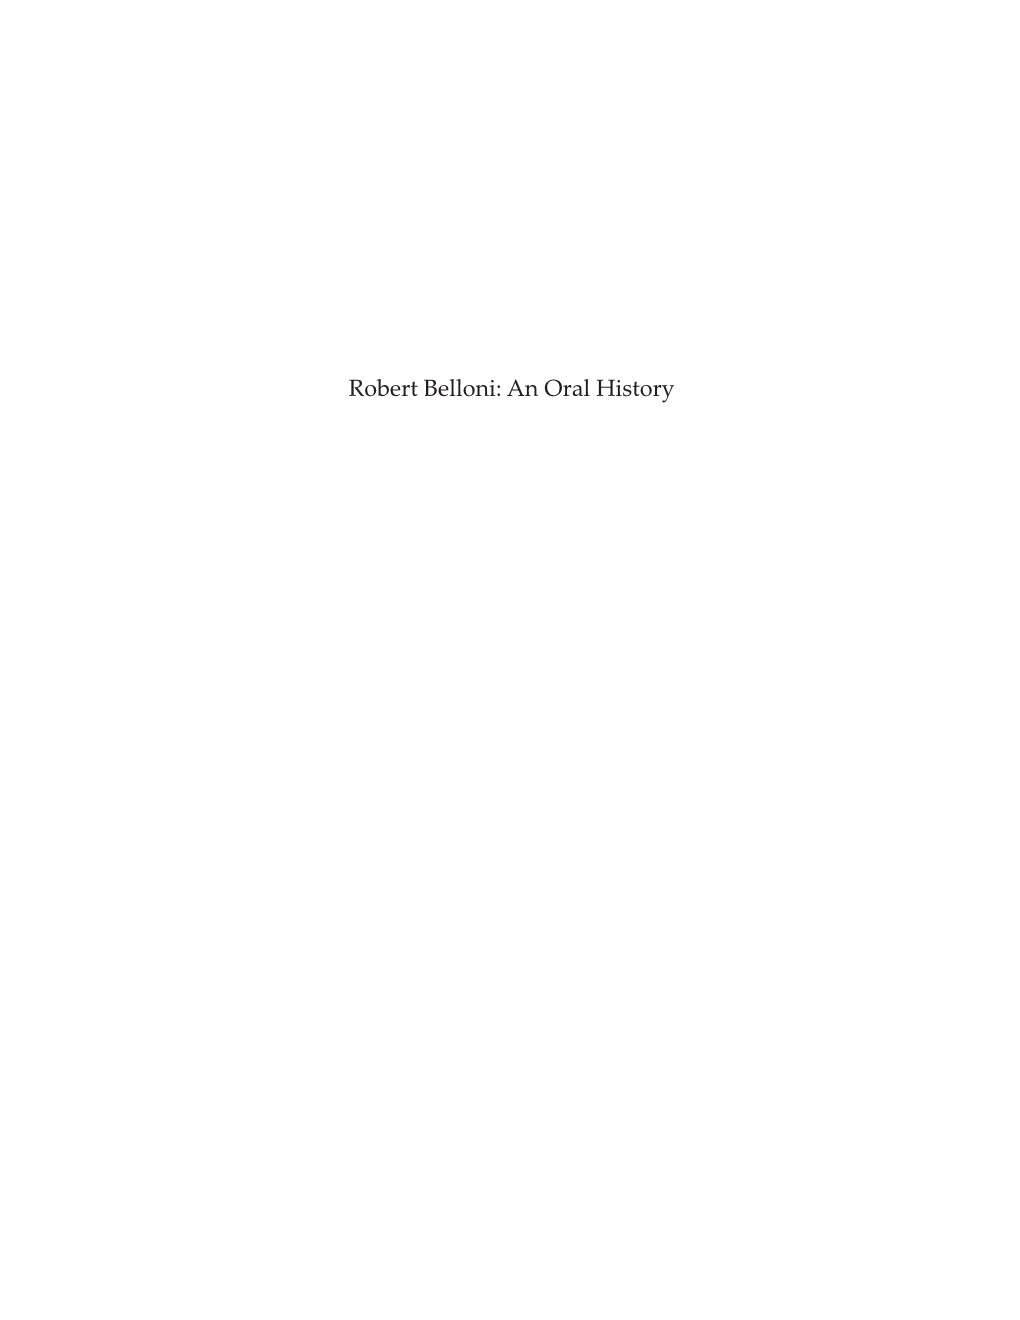 Robert Belloni: an Oral History